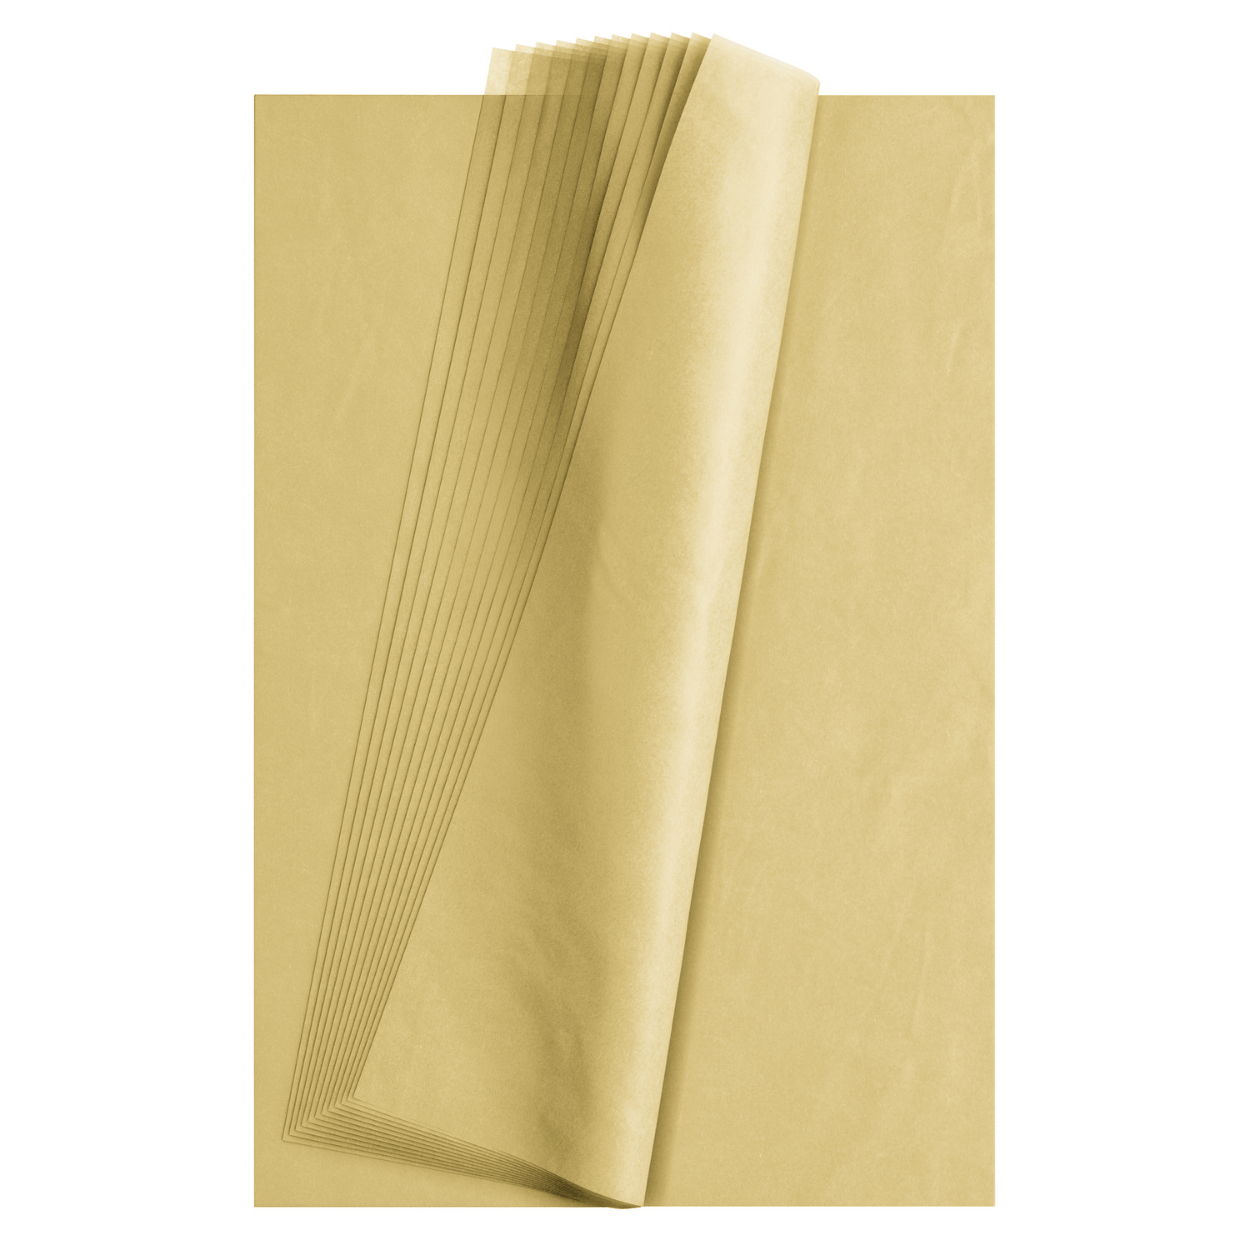 Gold Wrapping Tissue Paper Set - FiveSeasonStuff